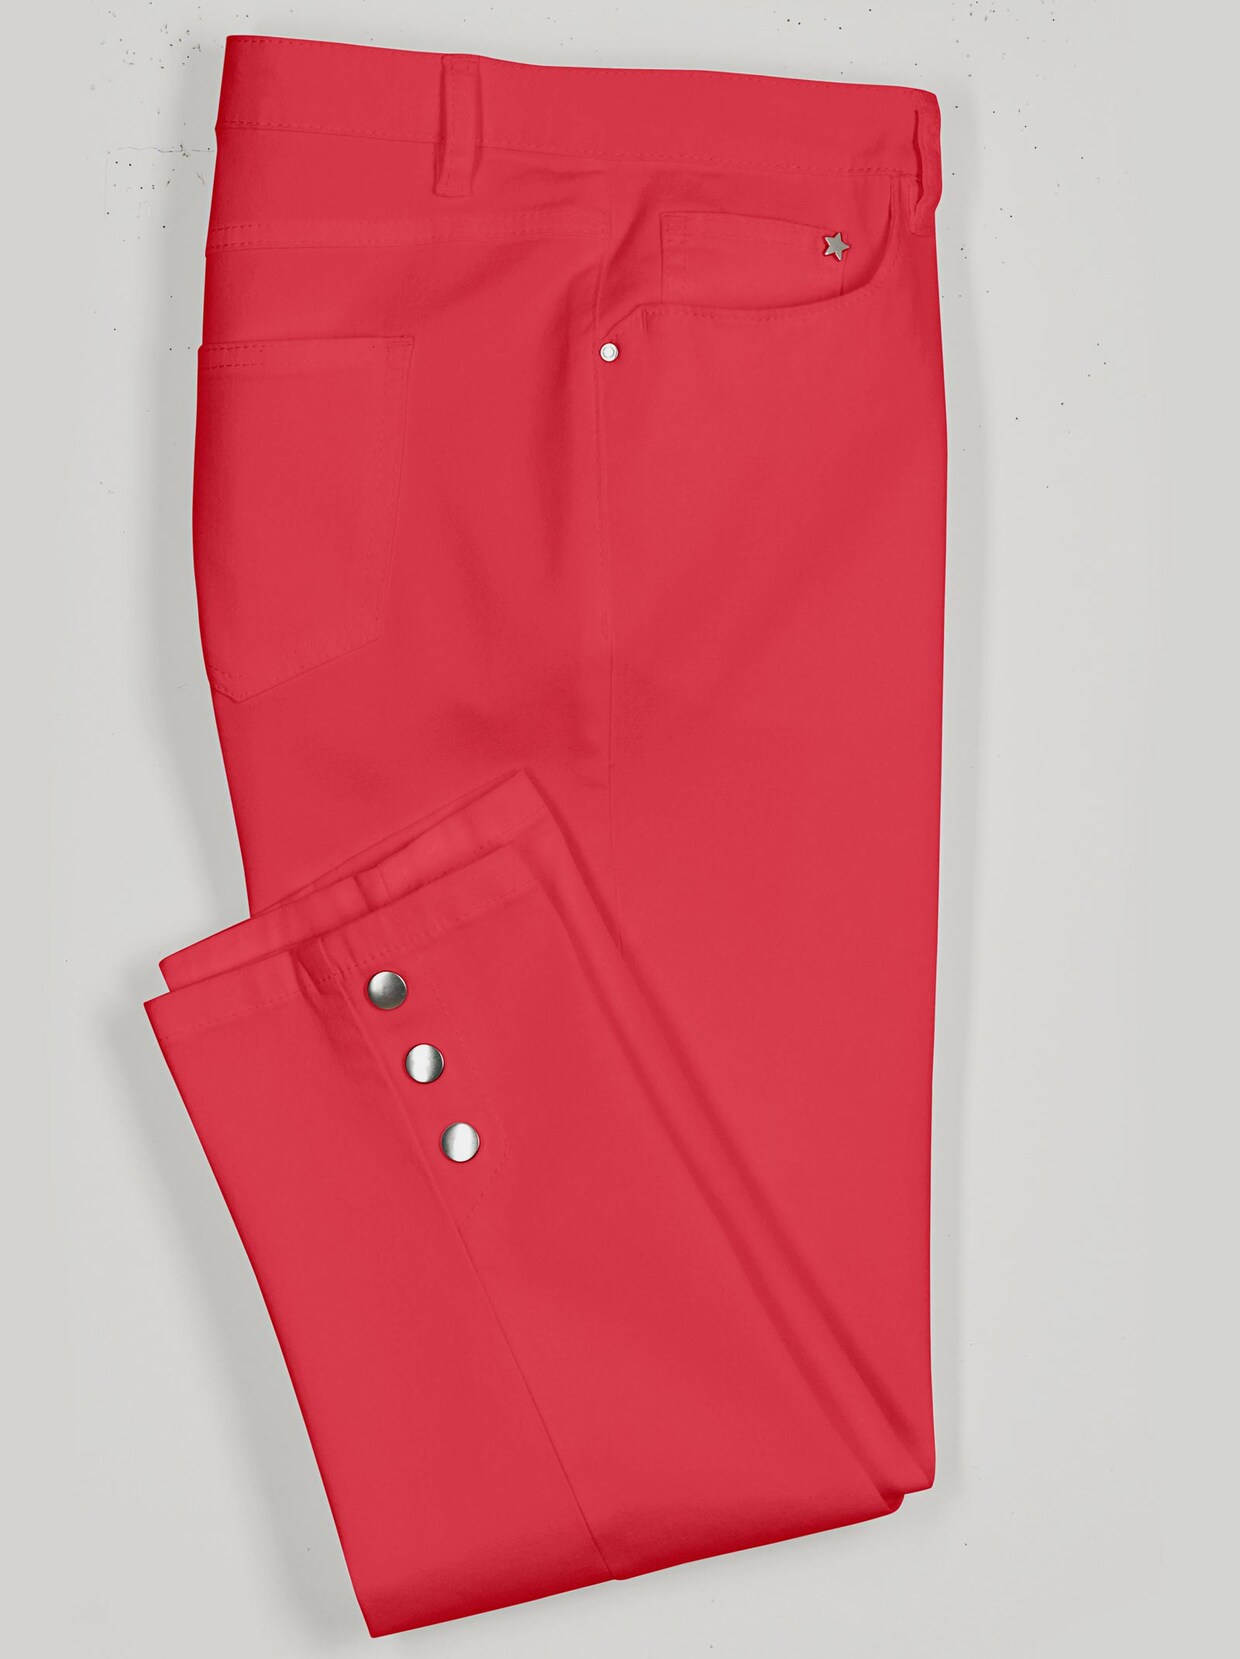 Pantalon extensible - rouge